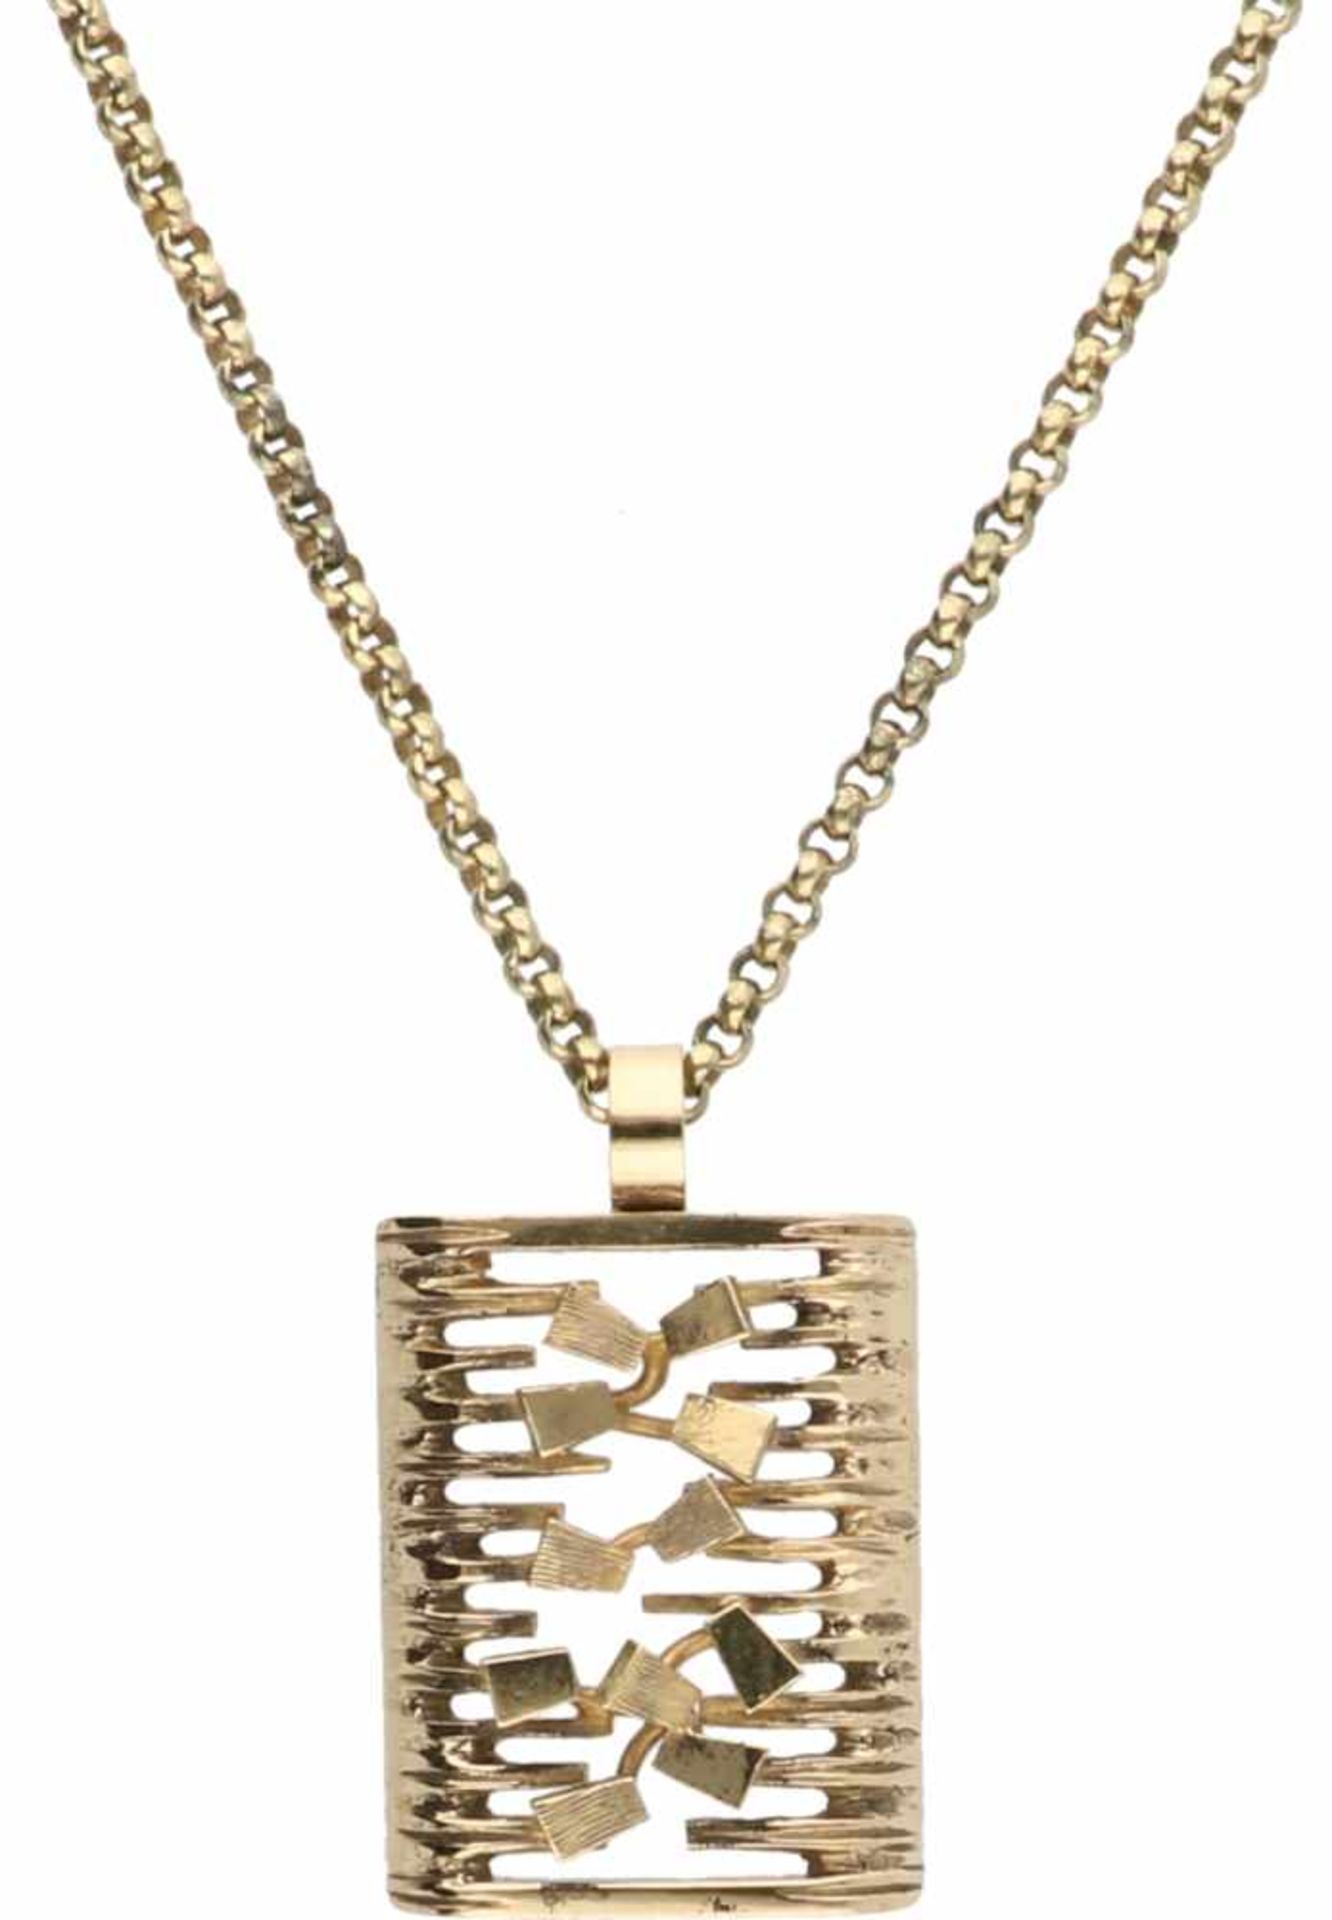 Italian design necklace met pendant yellow gold - 14 ct.